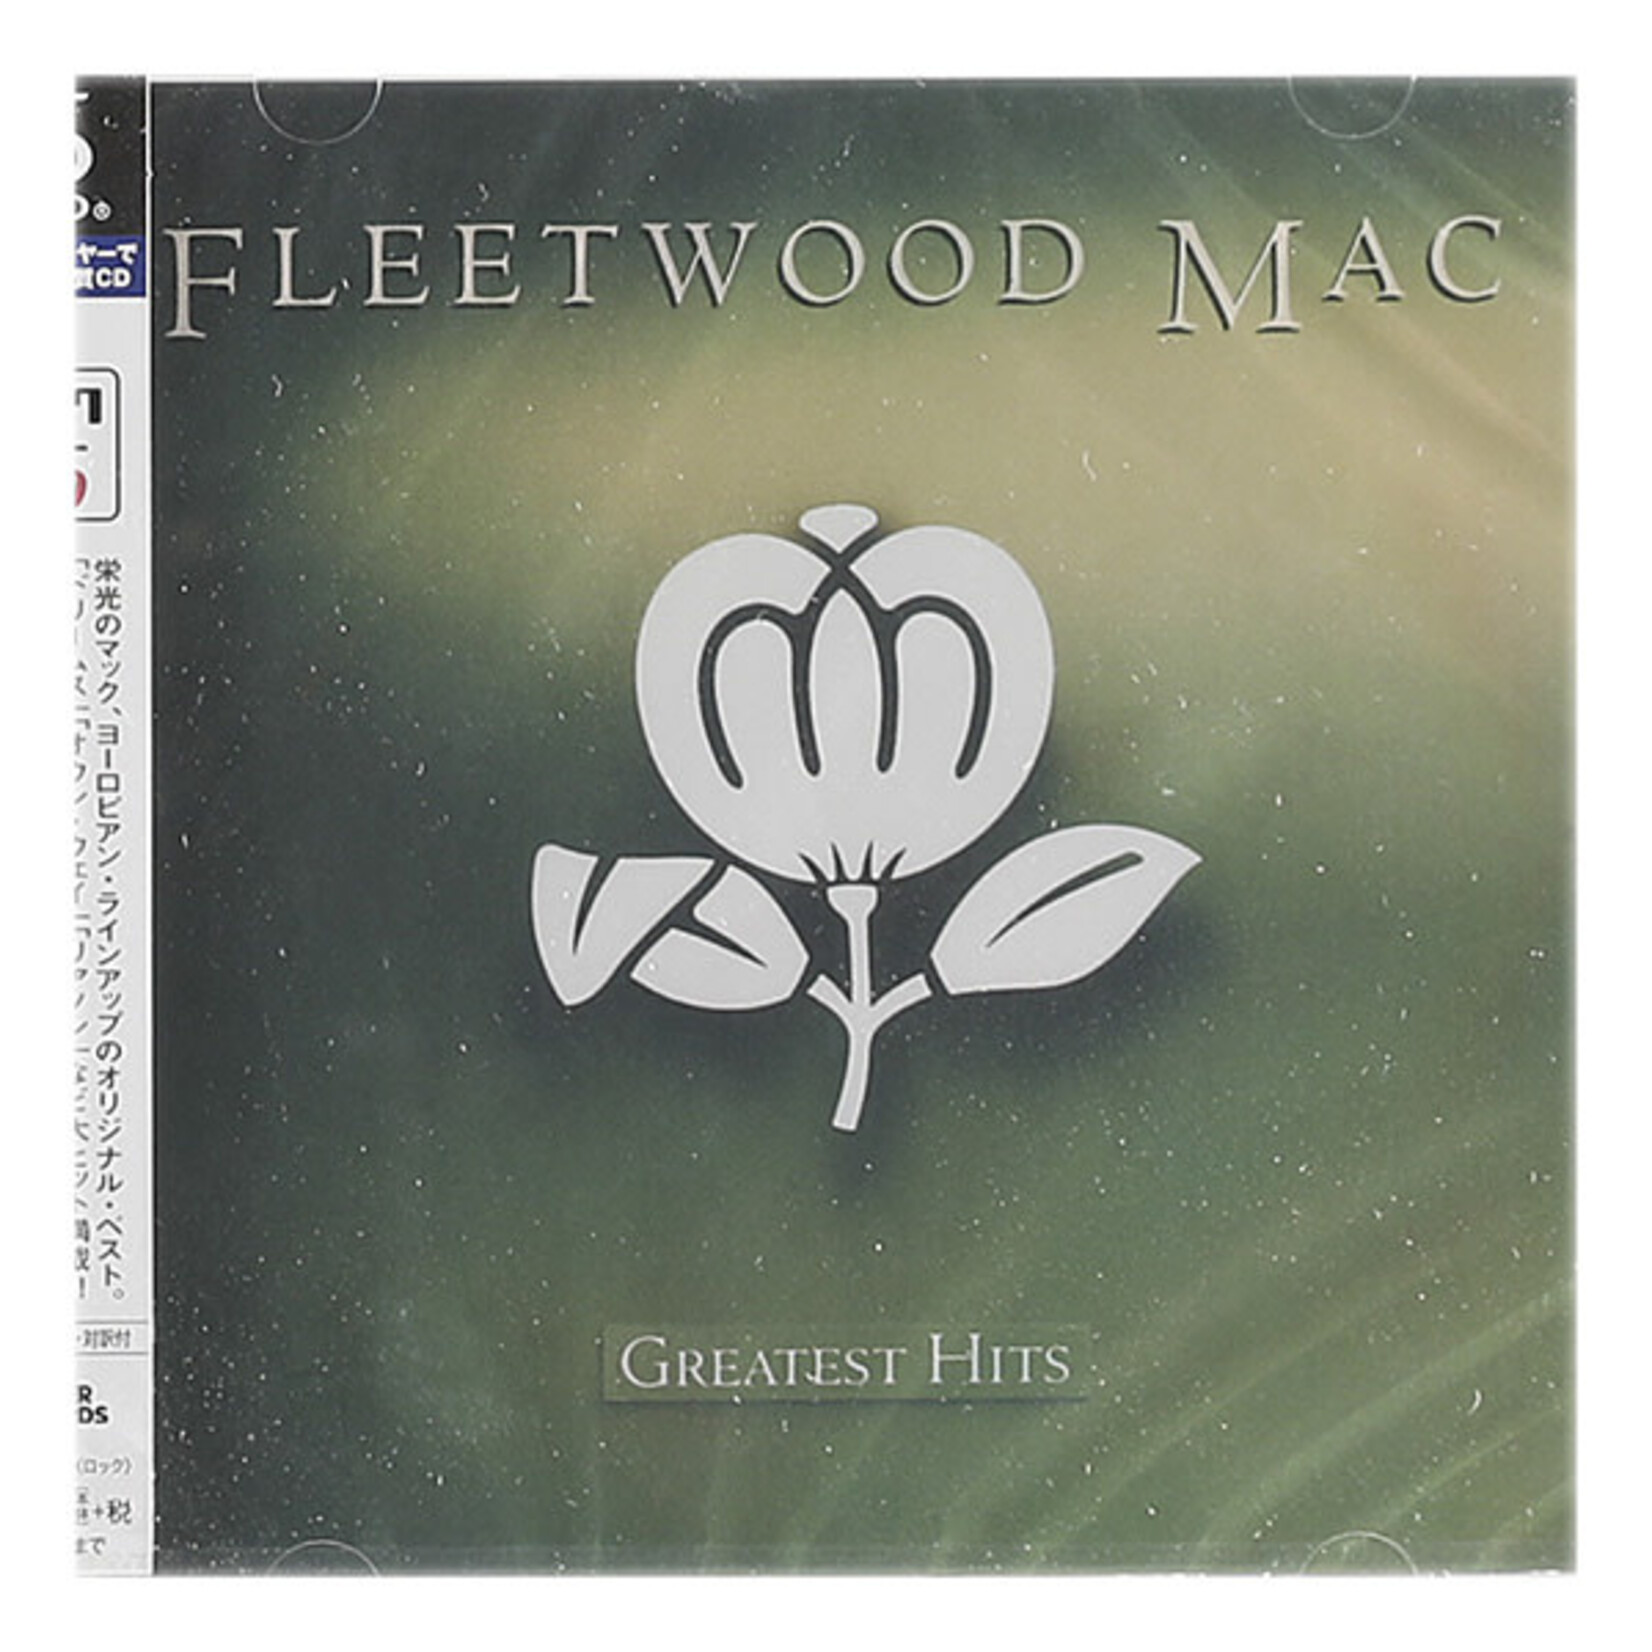 FLEETWOOD MAC - GREATEST HITS - JAPAN IMPORT CD